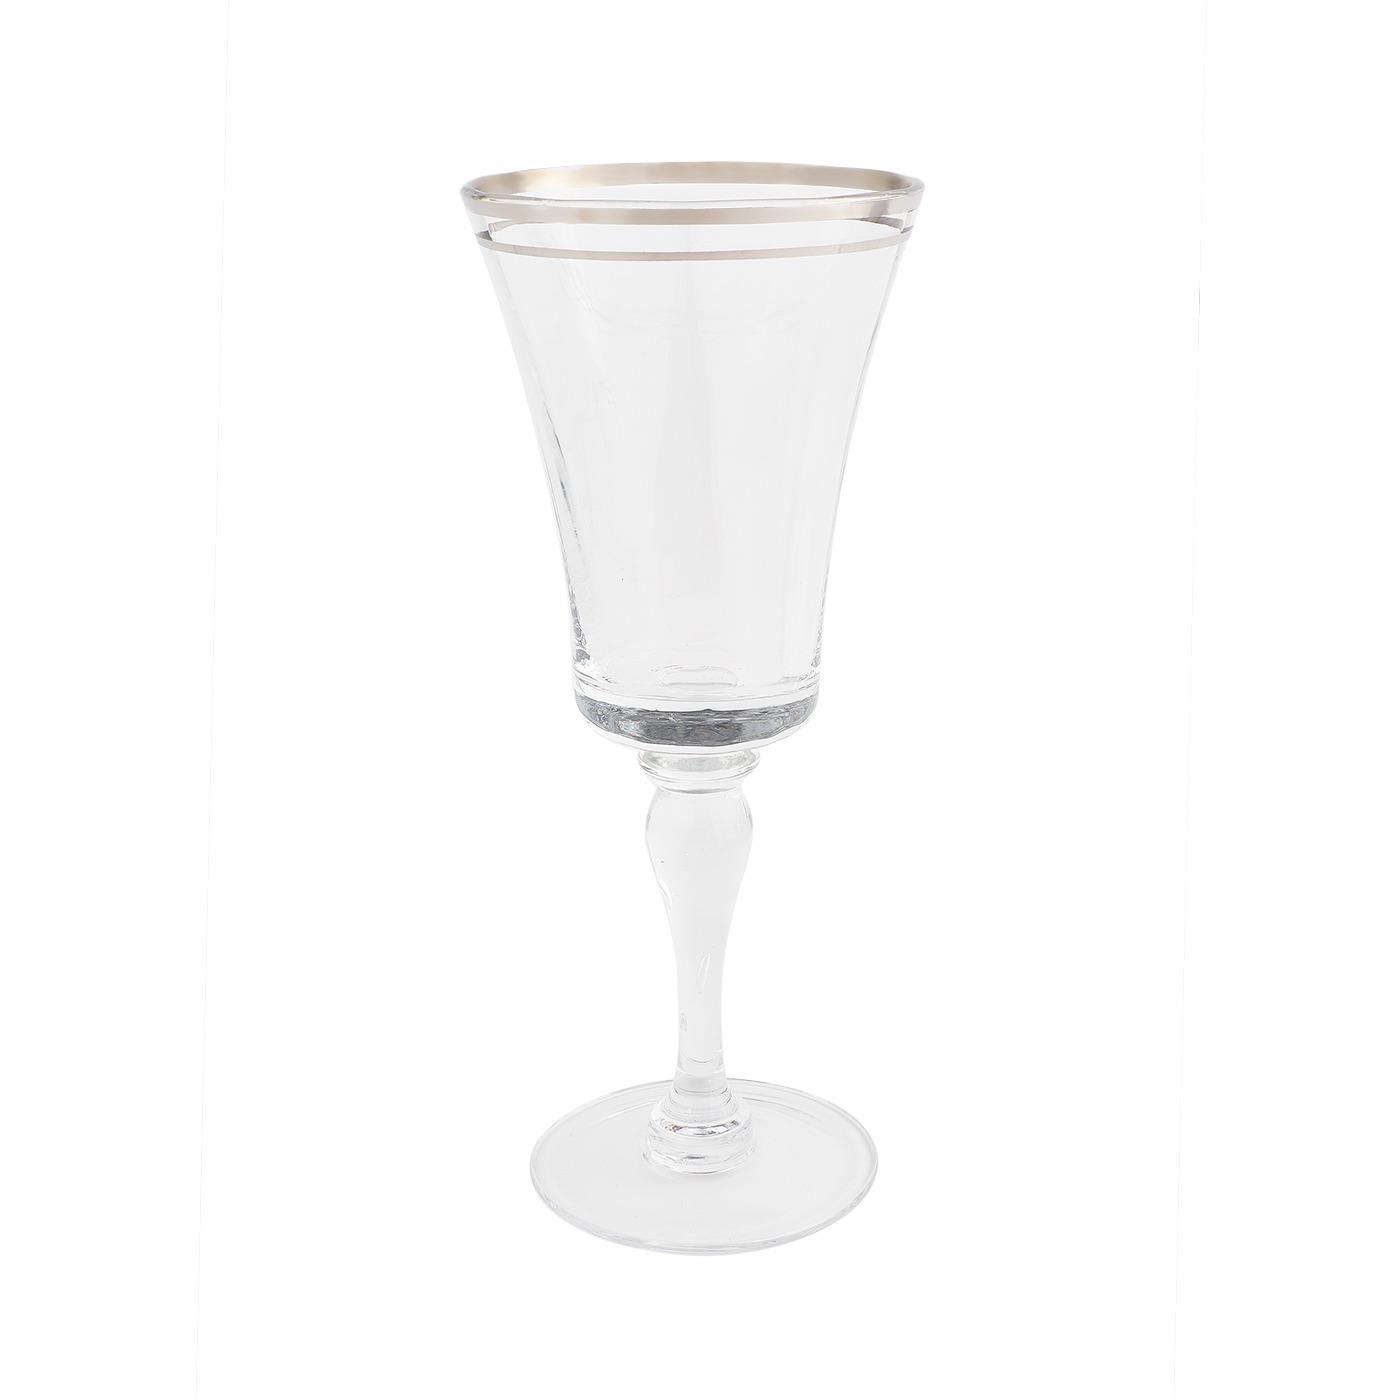 Allure Silver Collection -  Wine Glass 9 oz